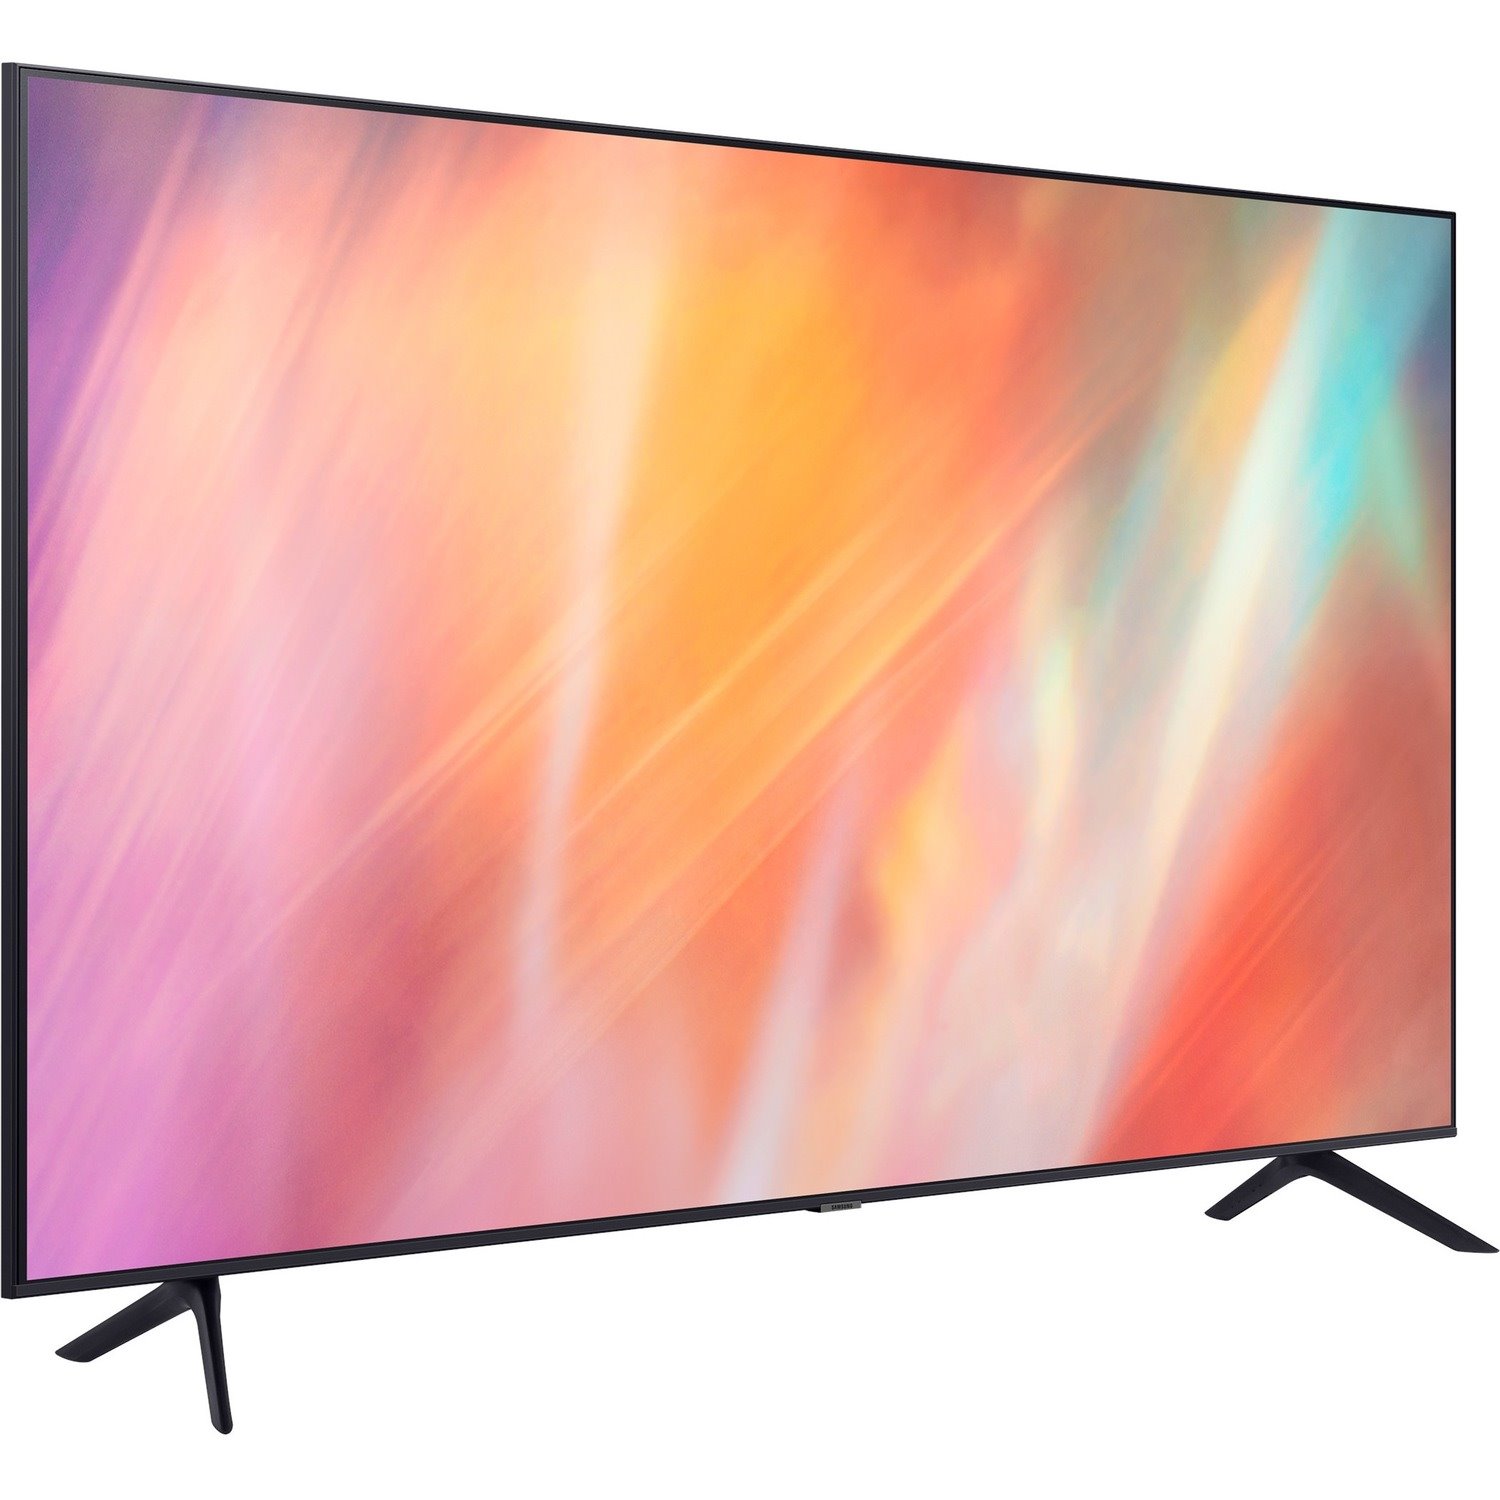 Samsung LH65BEAHLGW 65" Smart LED-LCD TV - 4K UHDTV - Titan Gray